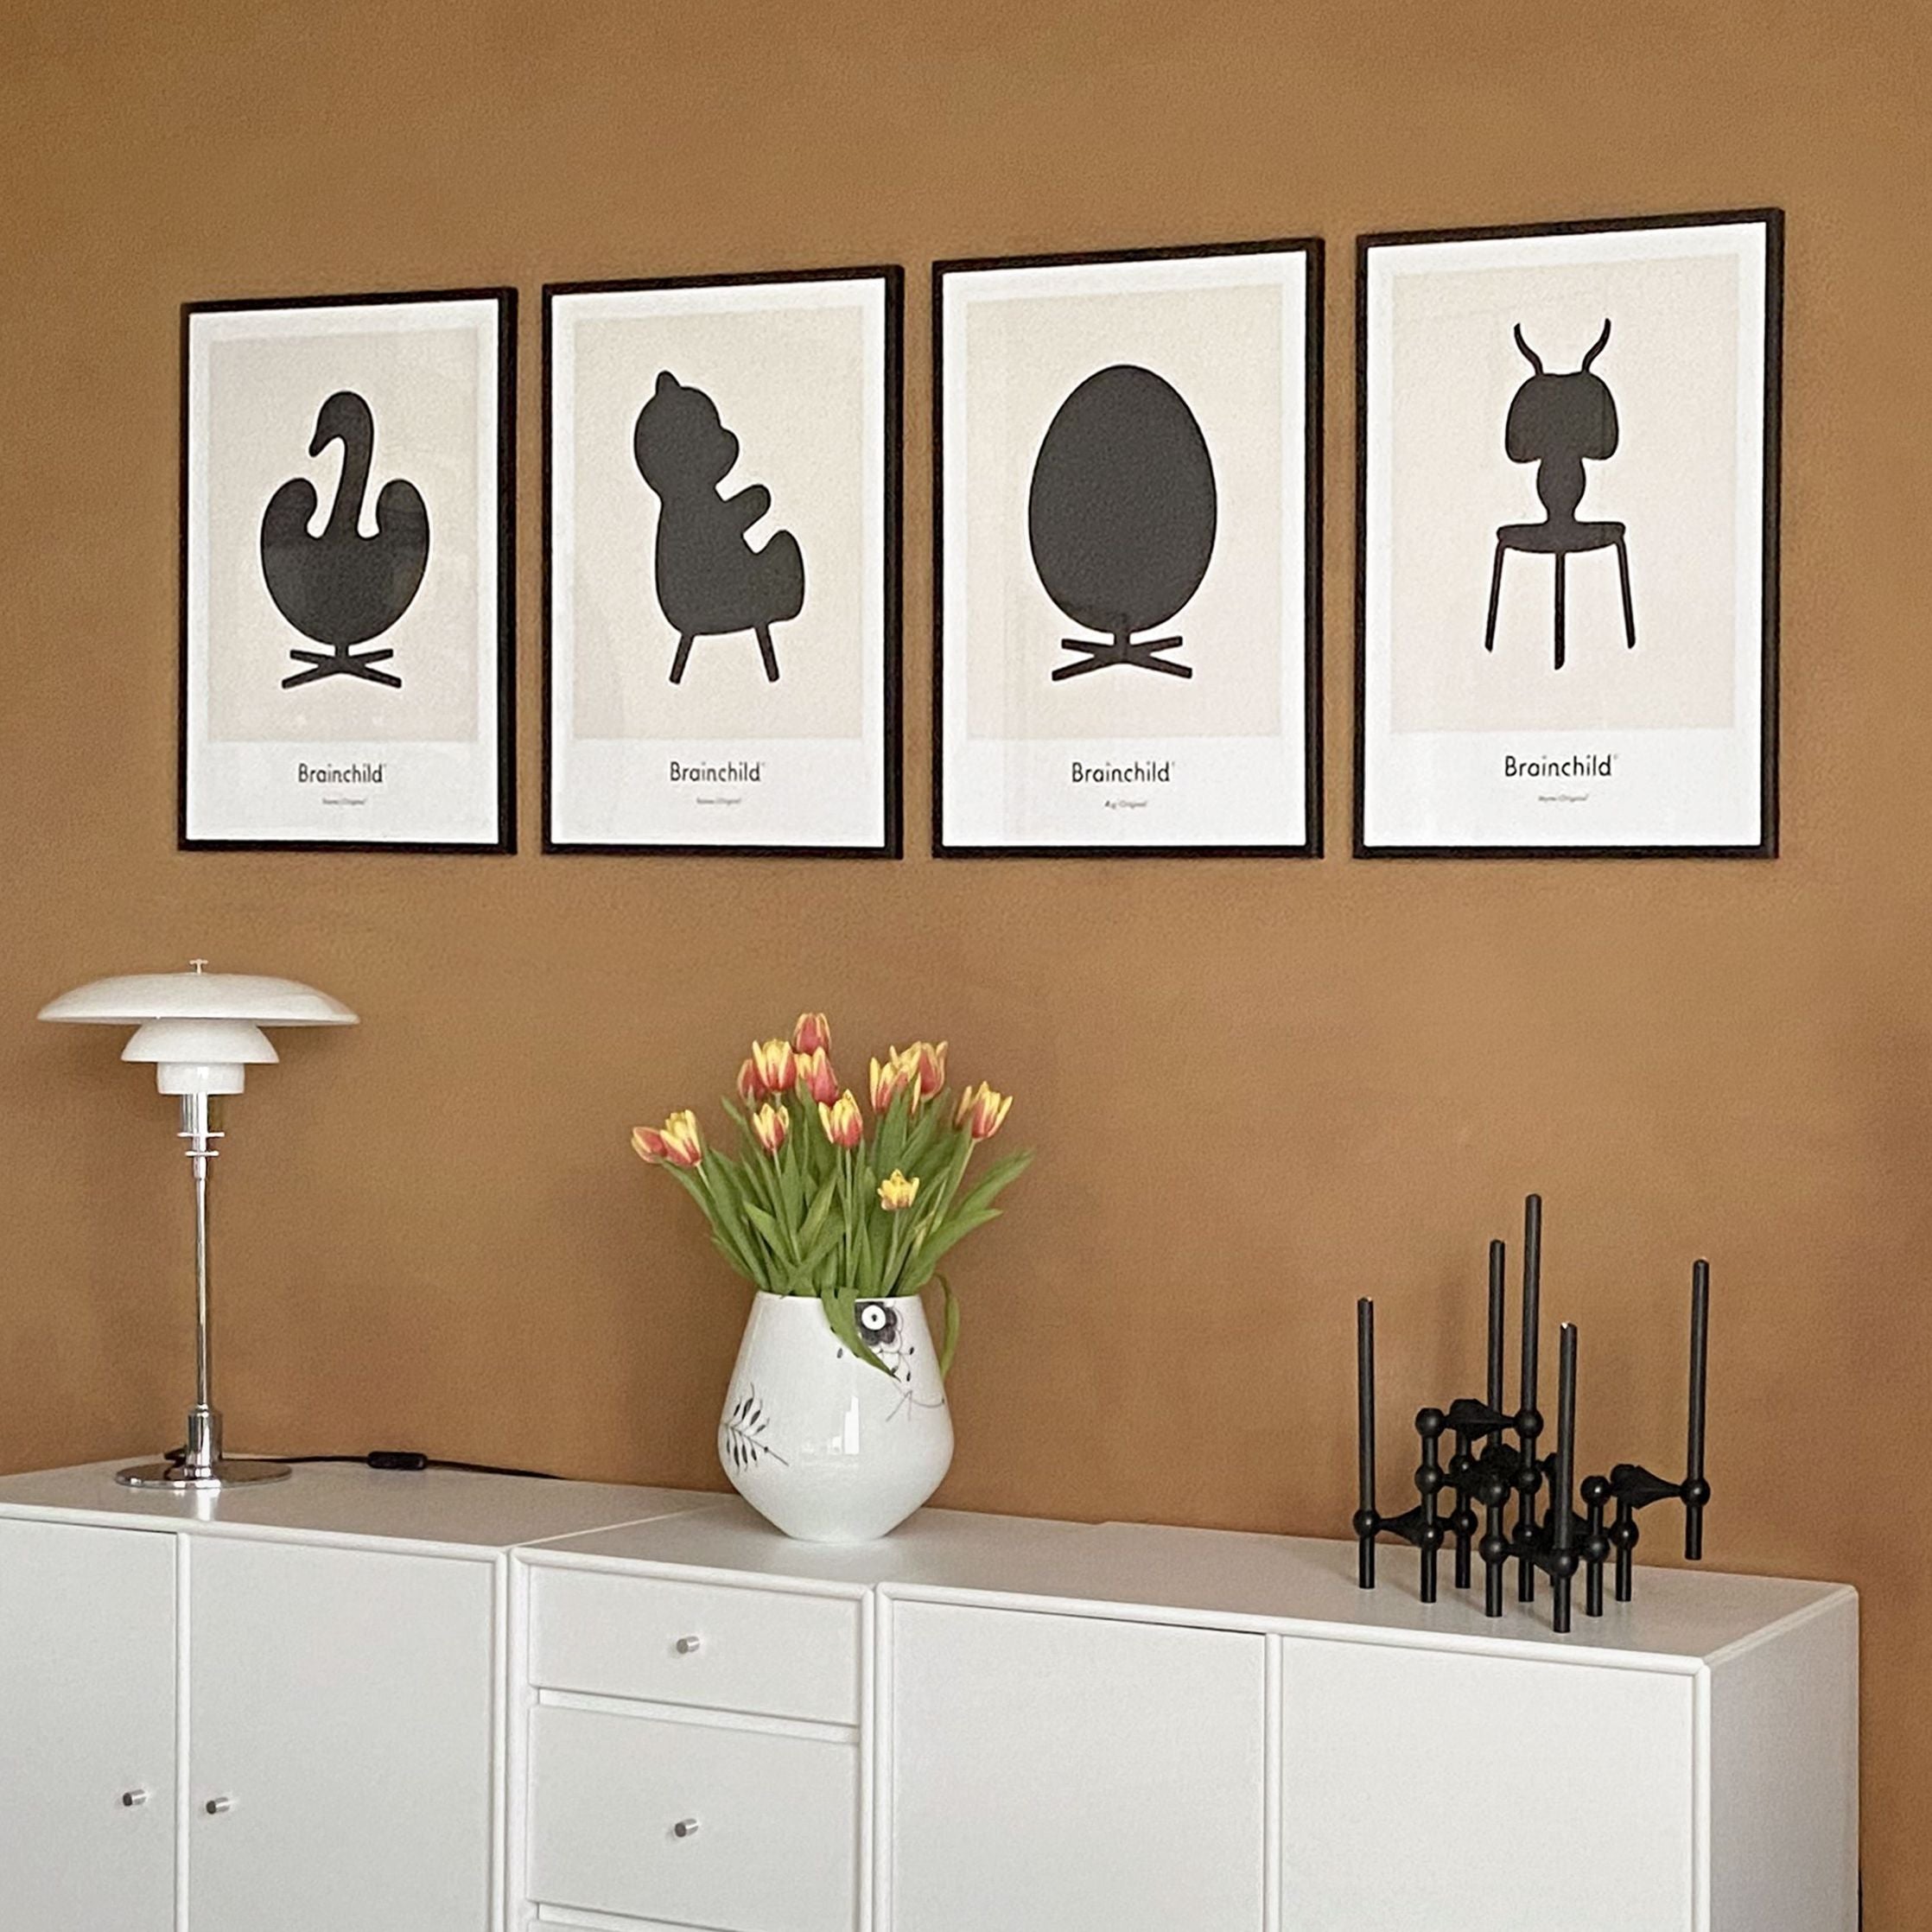 Brainchild Ameise Design Icon Poster, Rahmen aus schwarz lackiertem Holz 30x40 Cm, grau